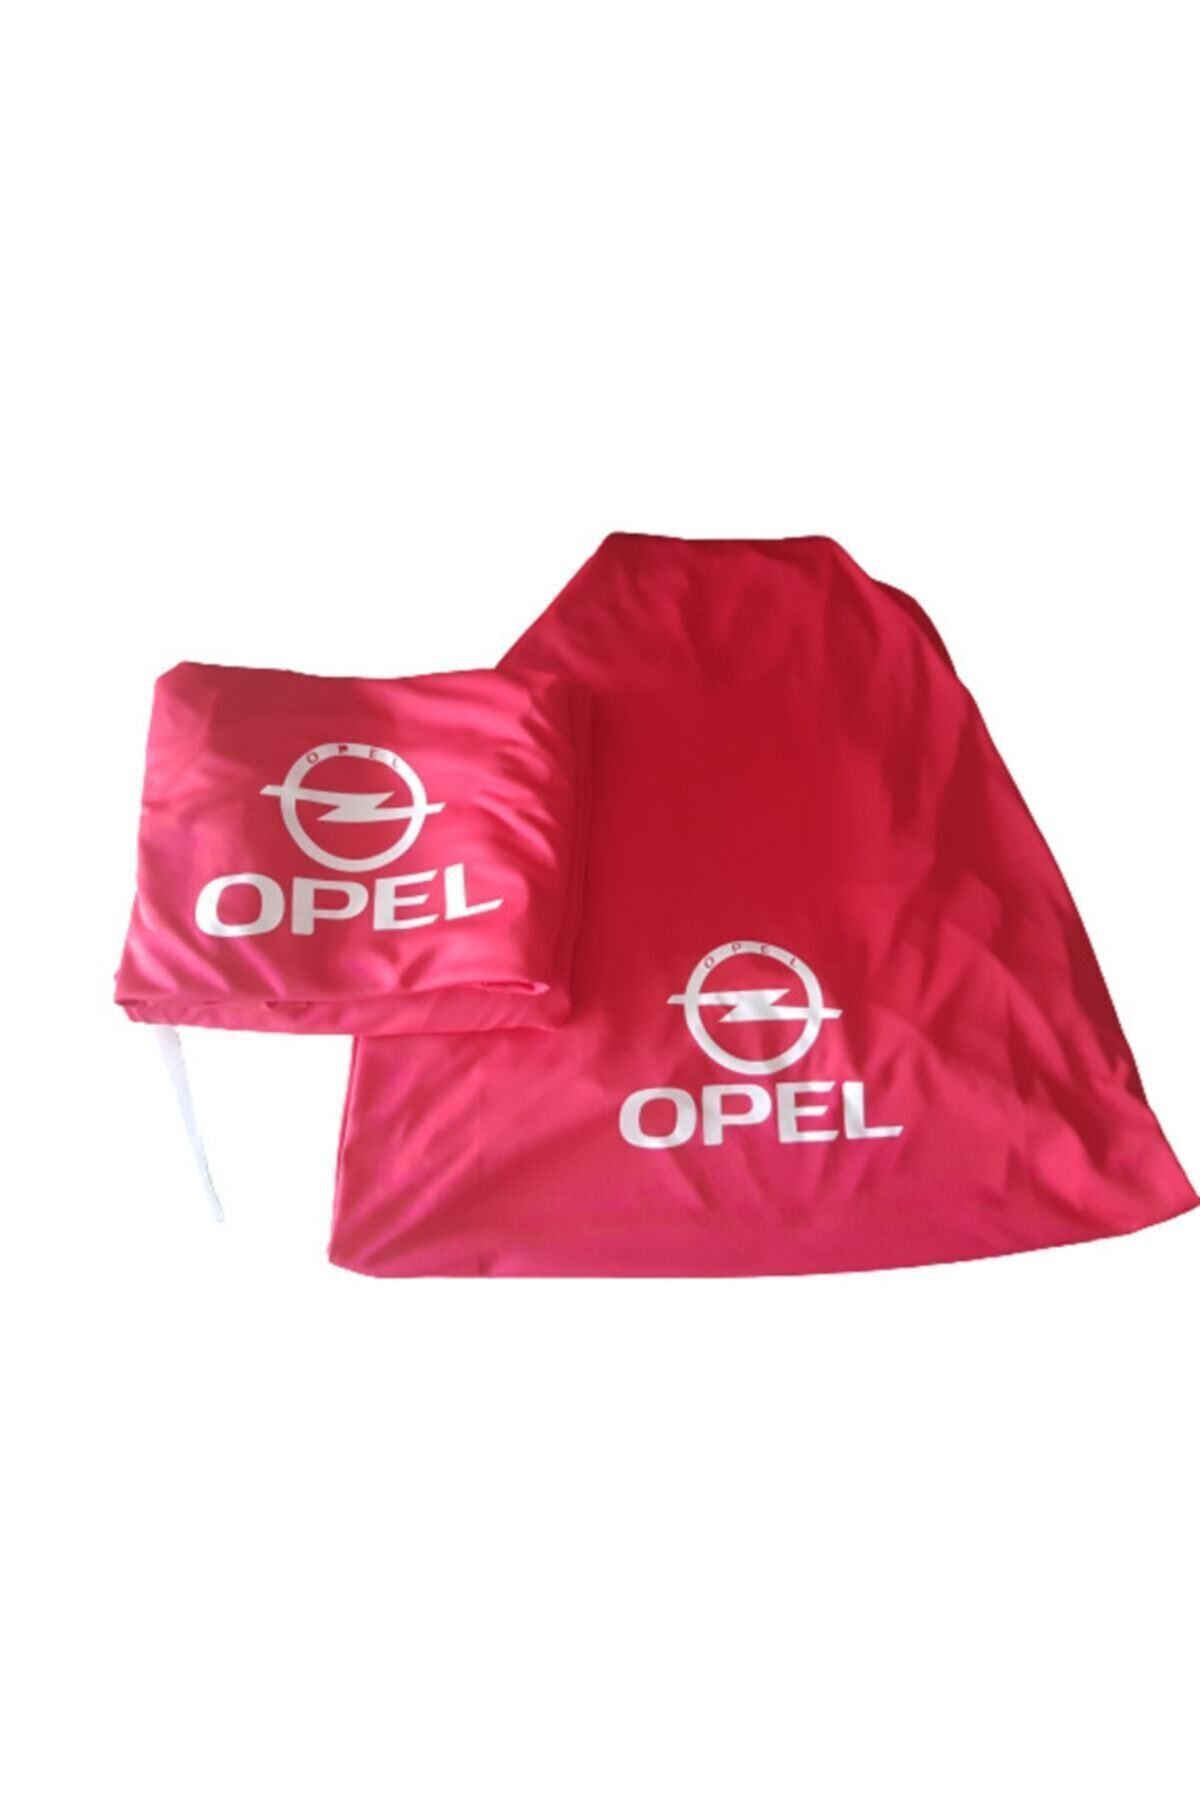 Opel Kırmızı Penye Servis Kılıfı